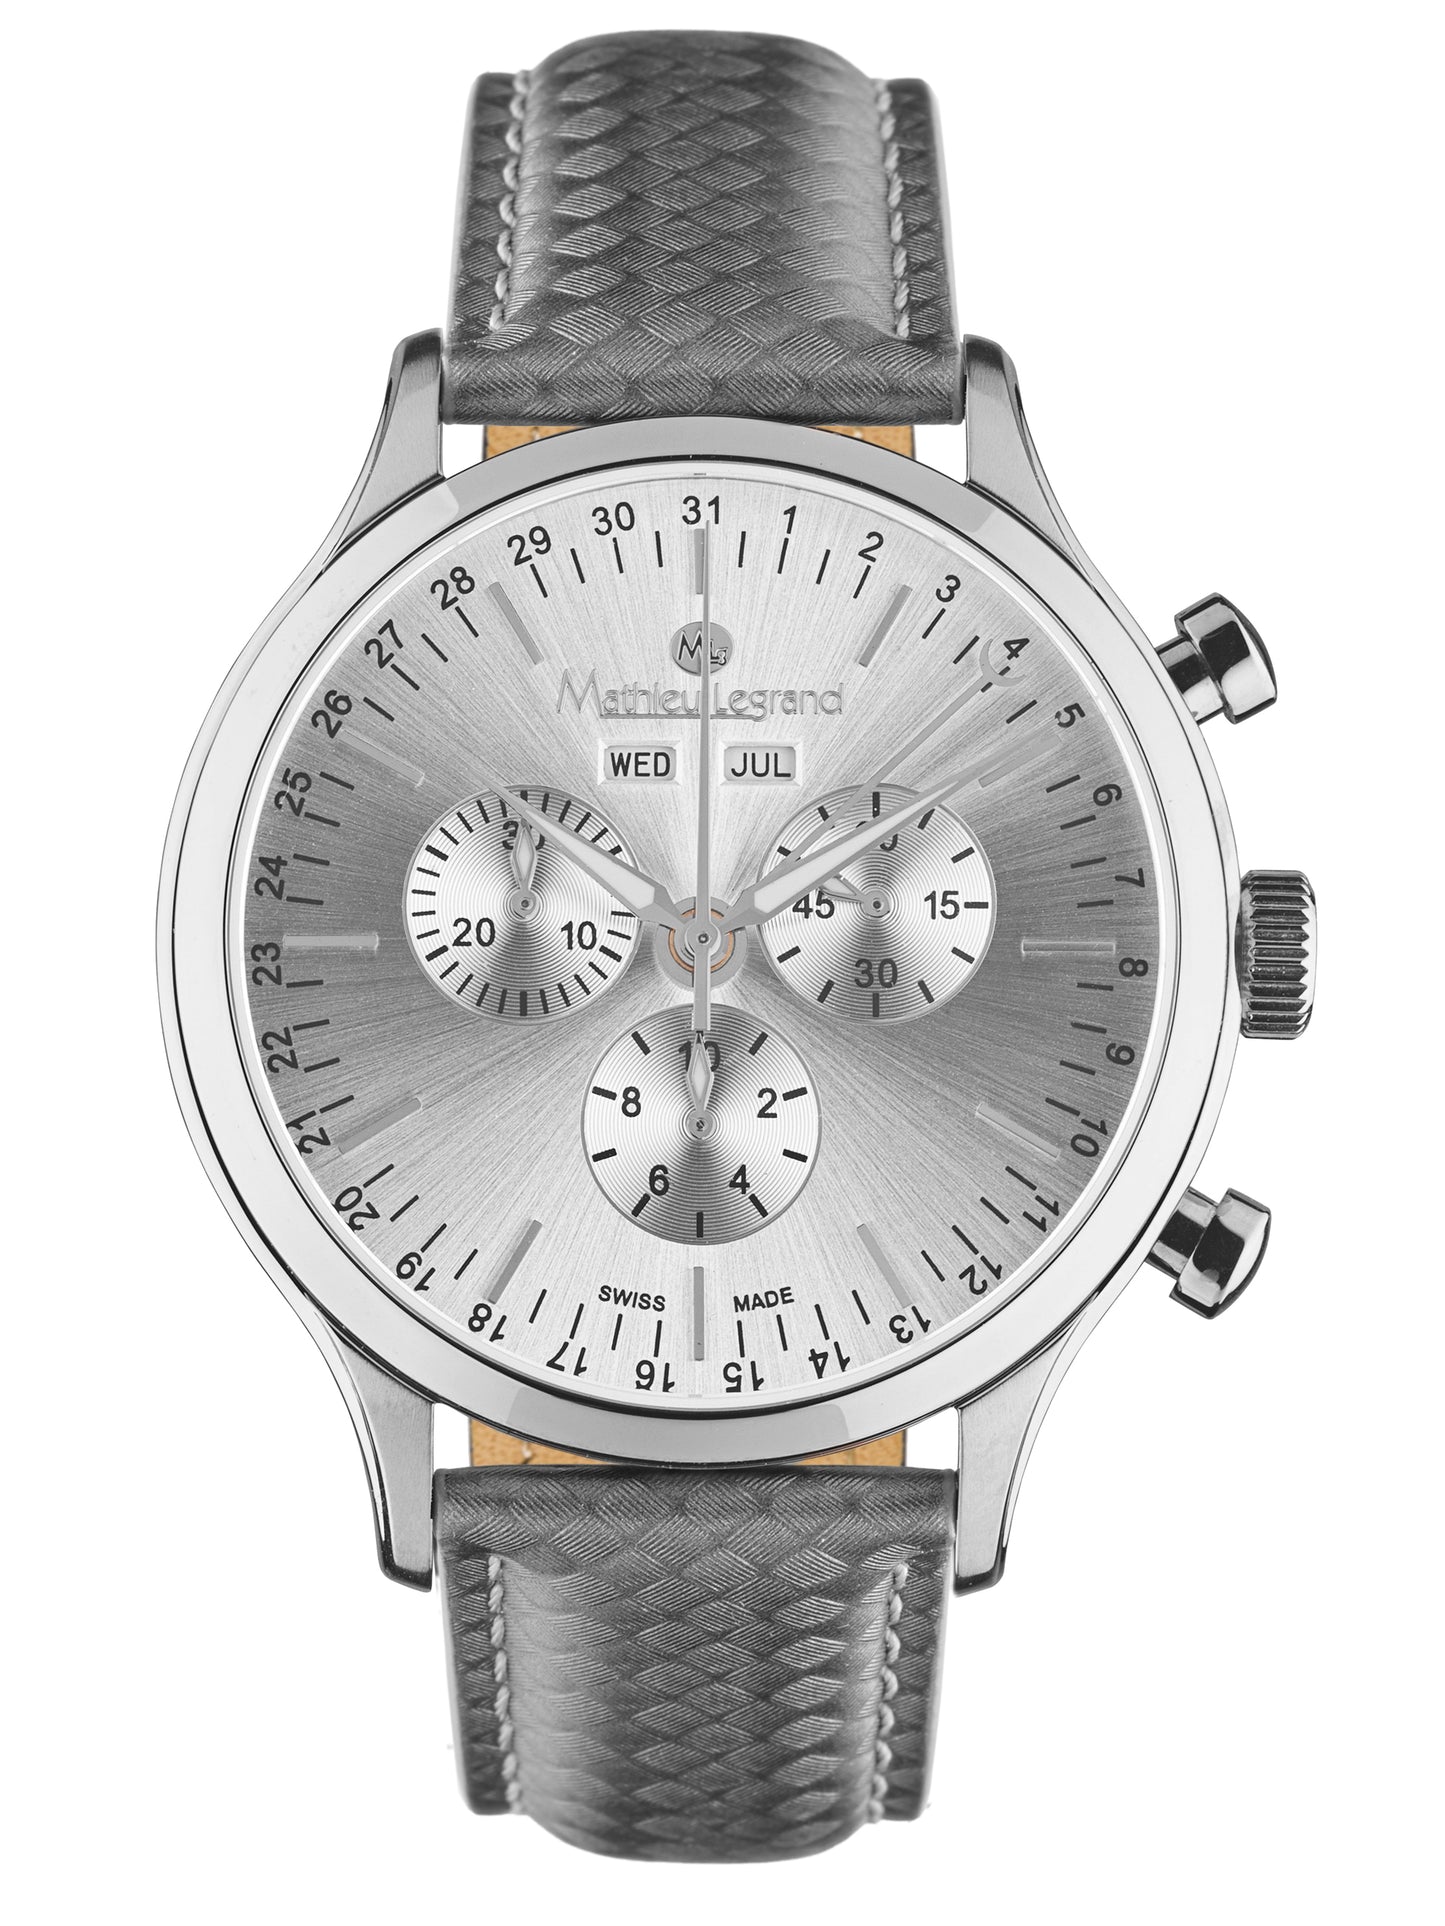 Automatic watches — Tournante — Mathieu Legrand — steel silver